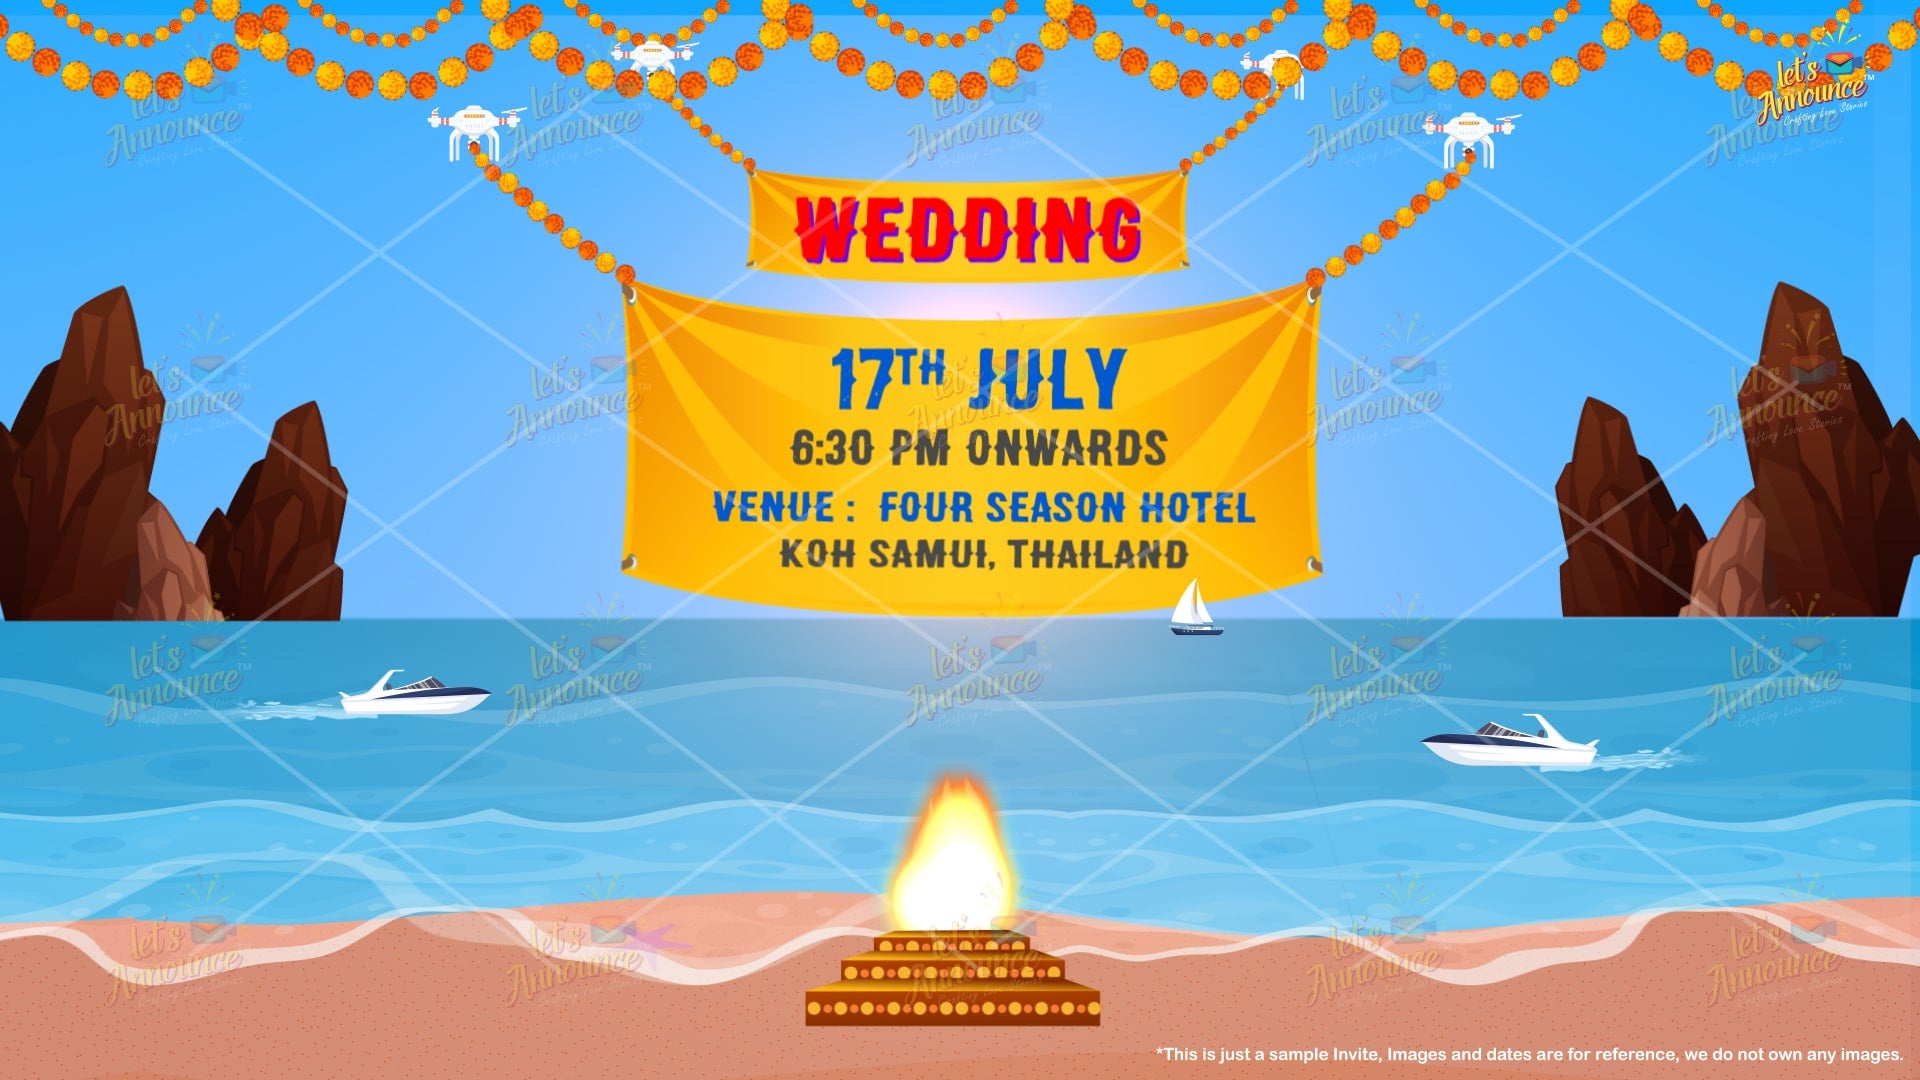 Amazing Beach Wedding Invite-61 sec (USD 100$)